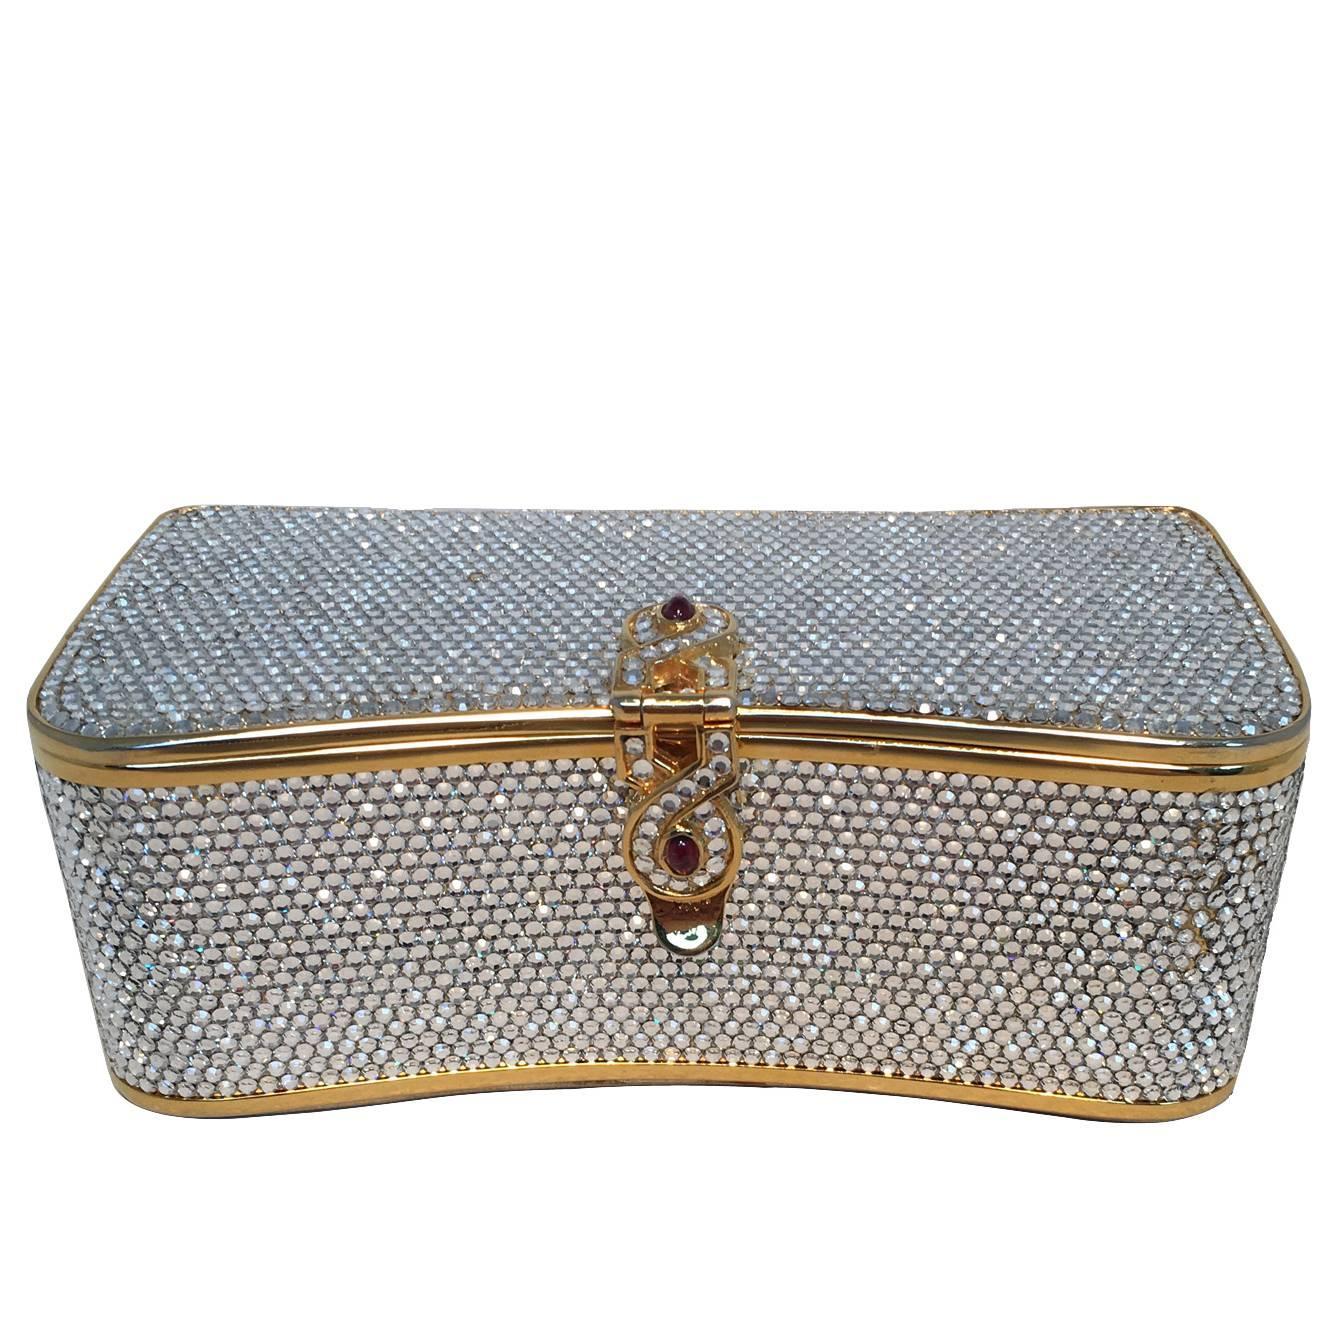 Judith Leiber Vintage Box Clear Swarovski Crystal Minaudiere Evening Bag Clutch For Sale at 1stdibs